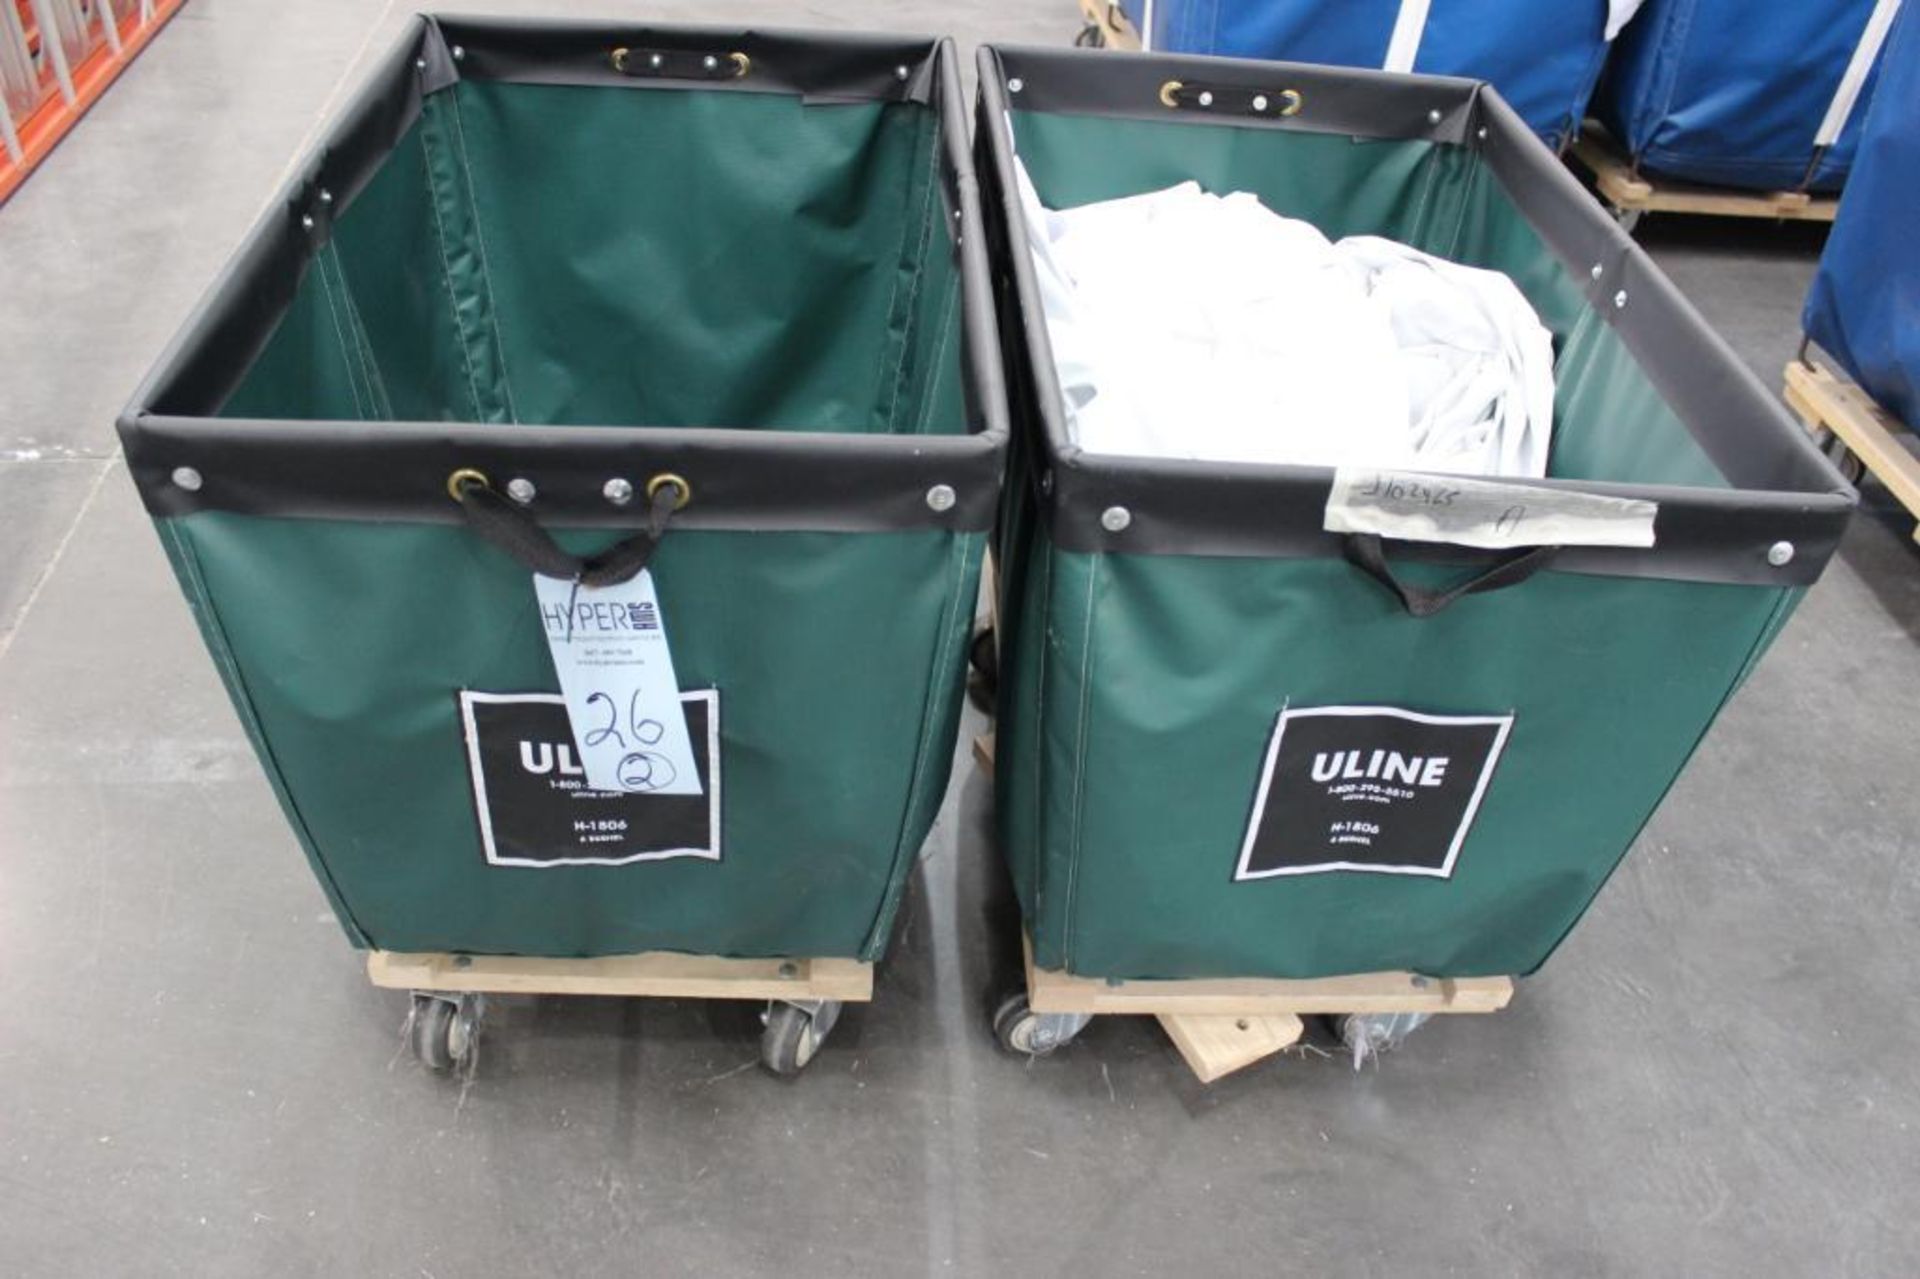 (2) Uline 6 bushel laundry carts model H-1806